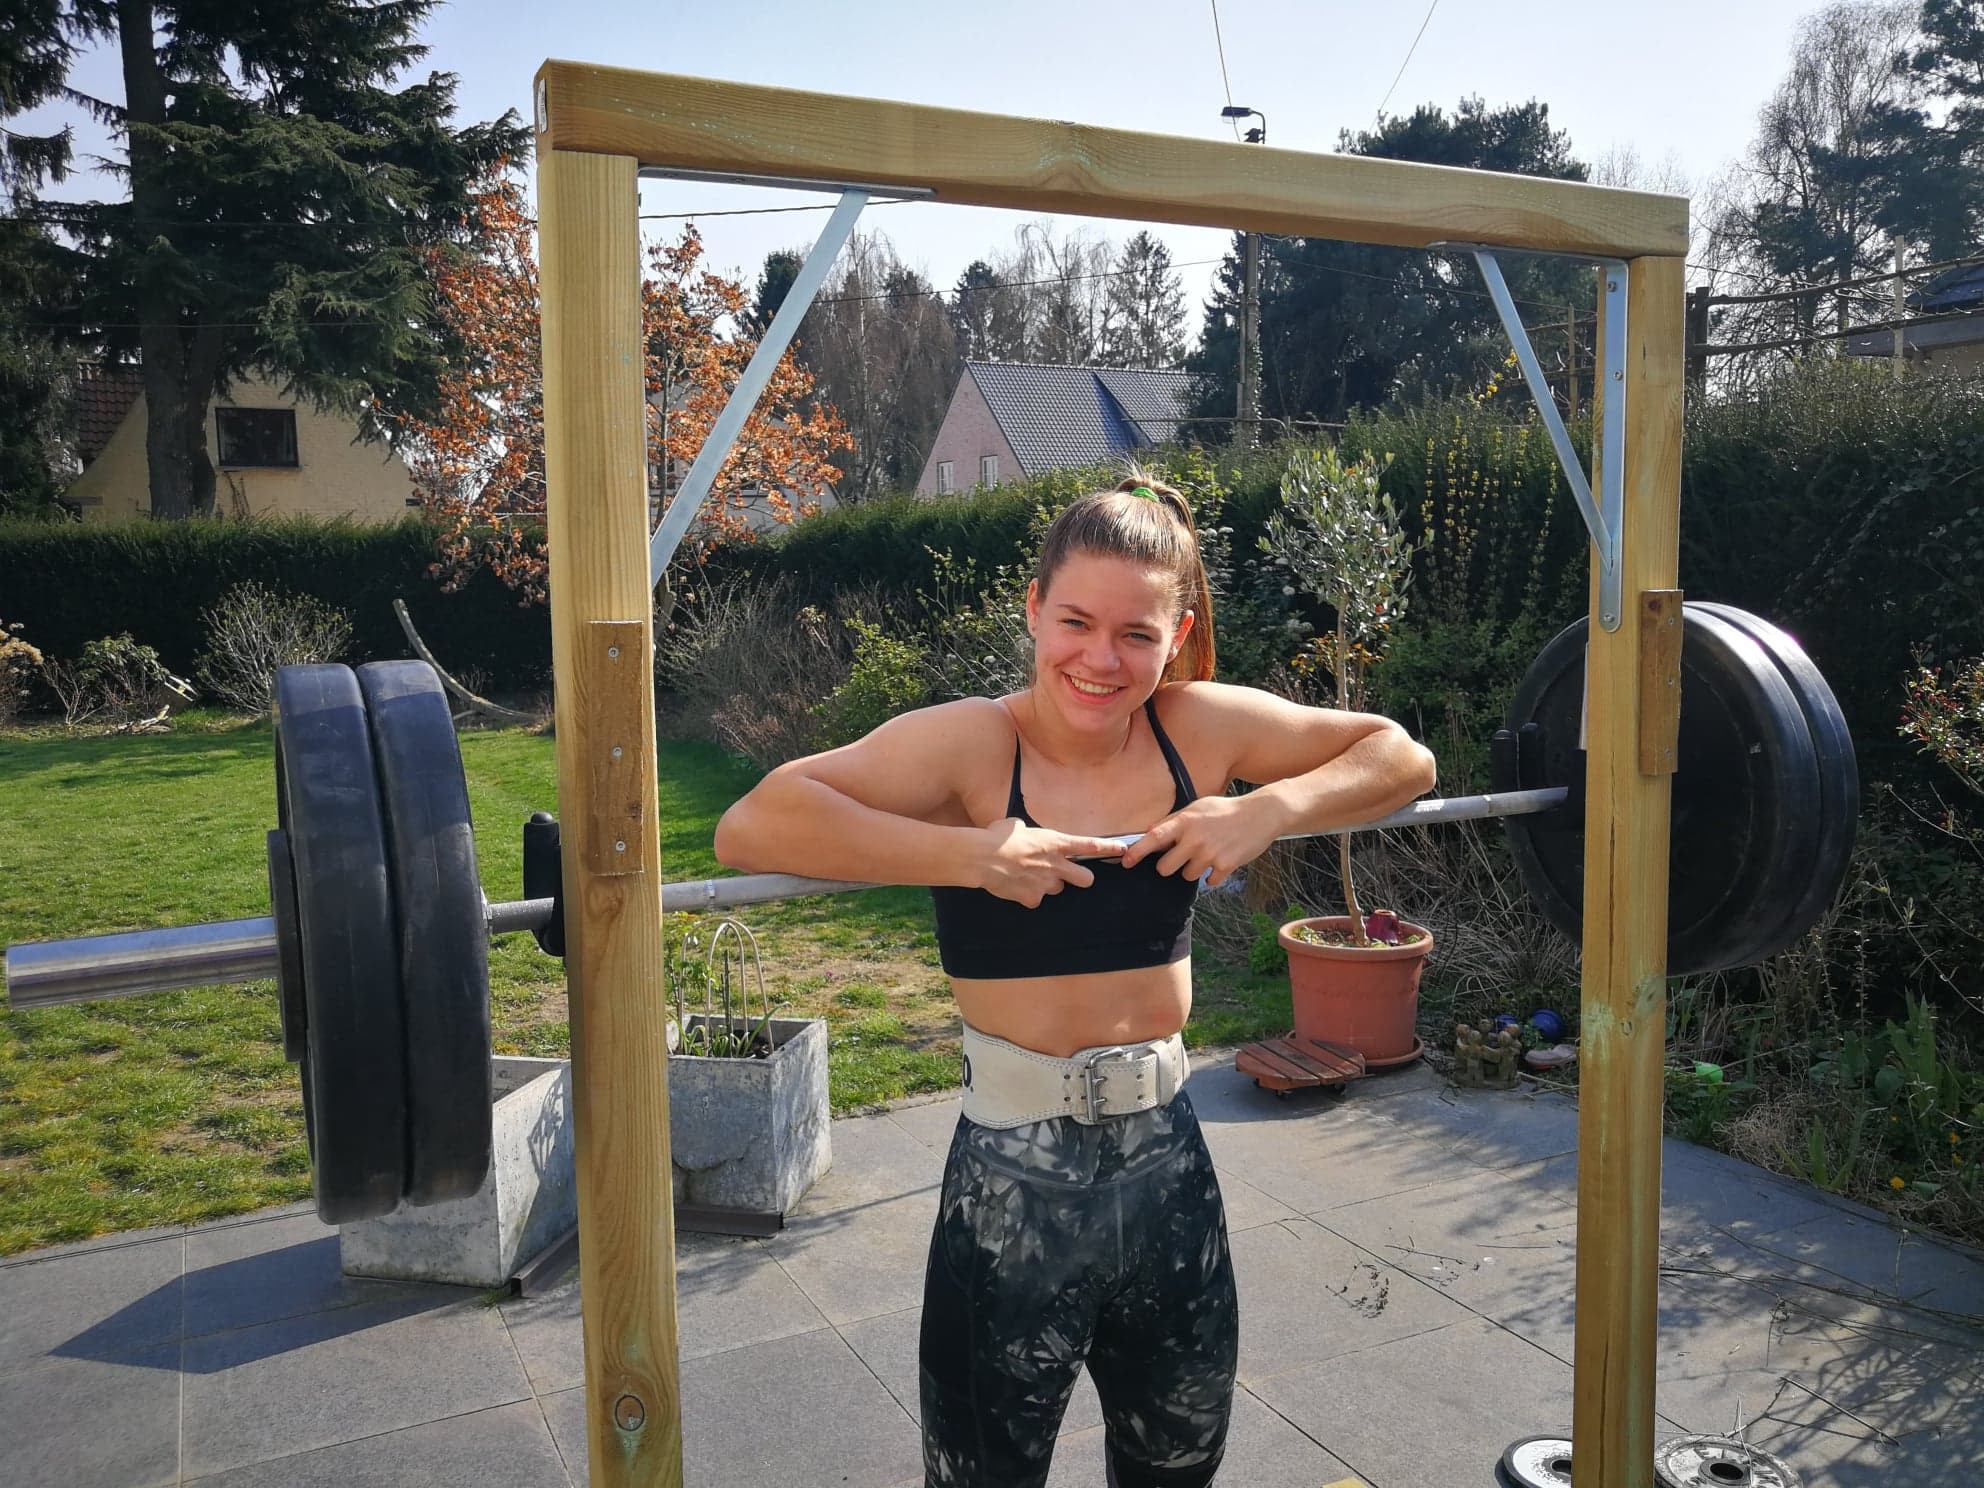 Belgian youth lifter Annelien Vandenabeele was built a wooden squat rack by her father ©Tom Goegebuer